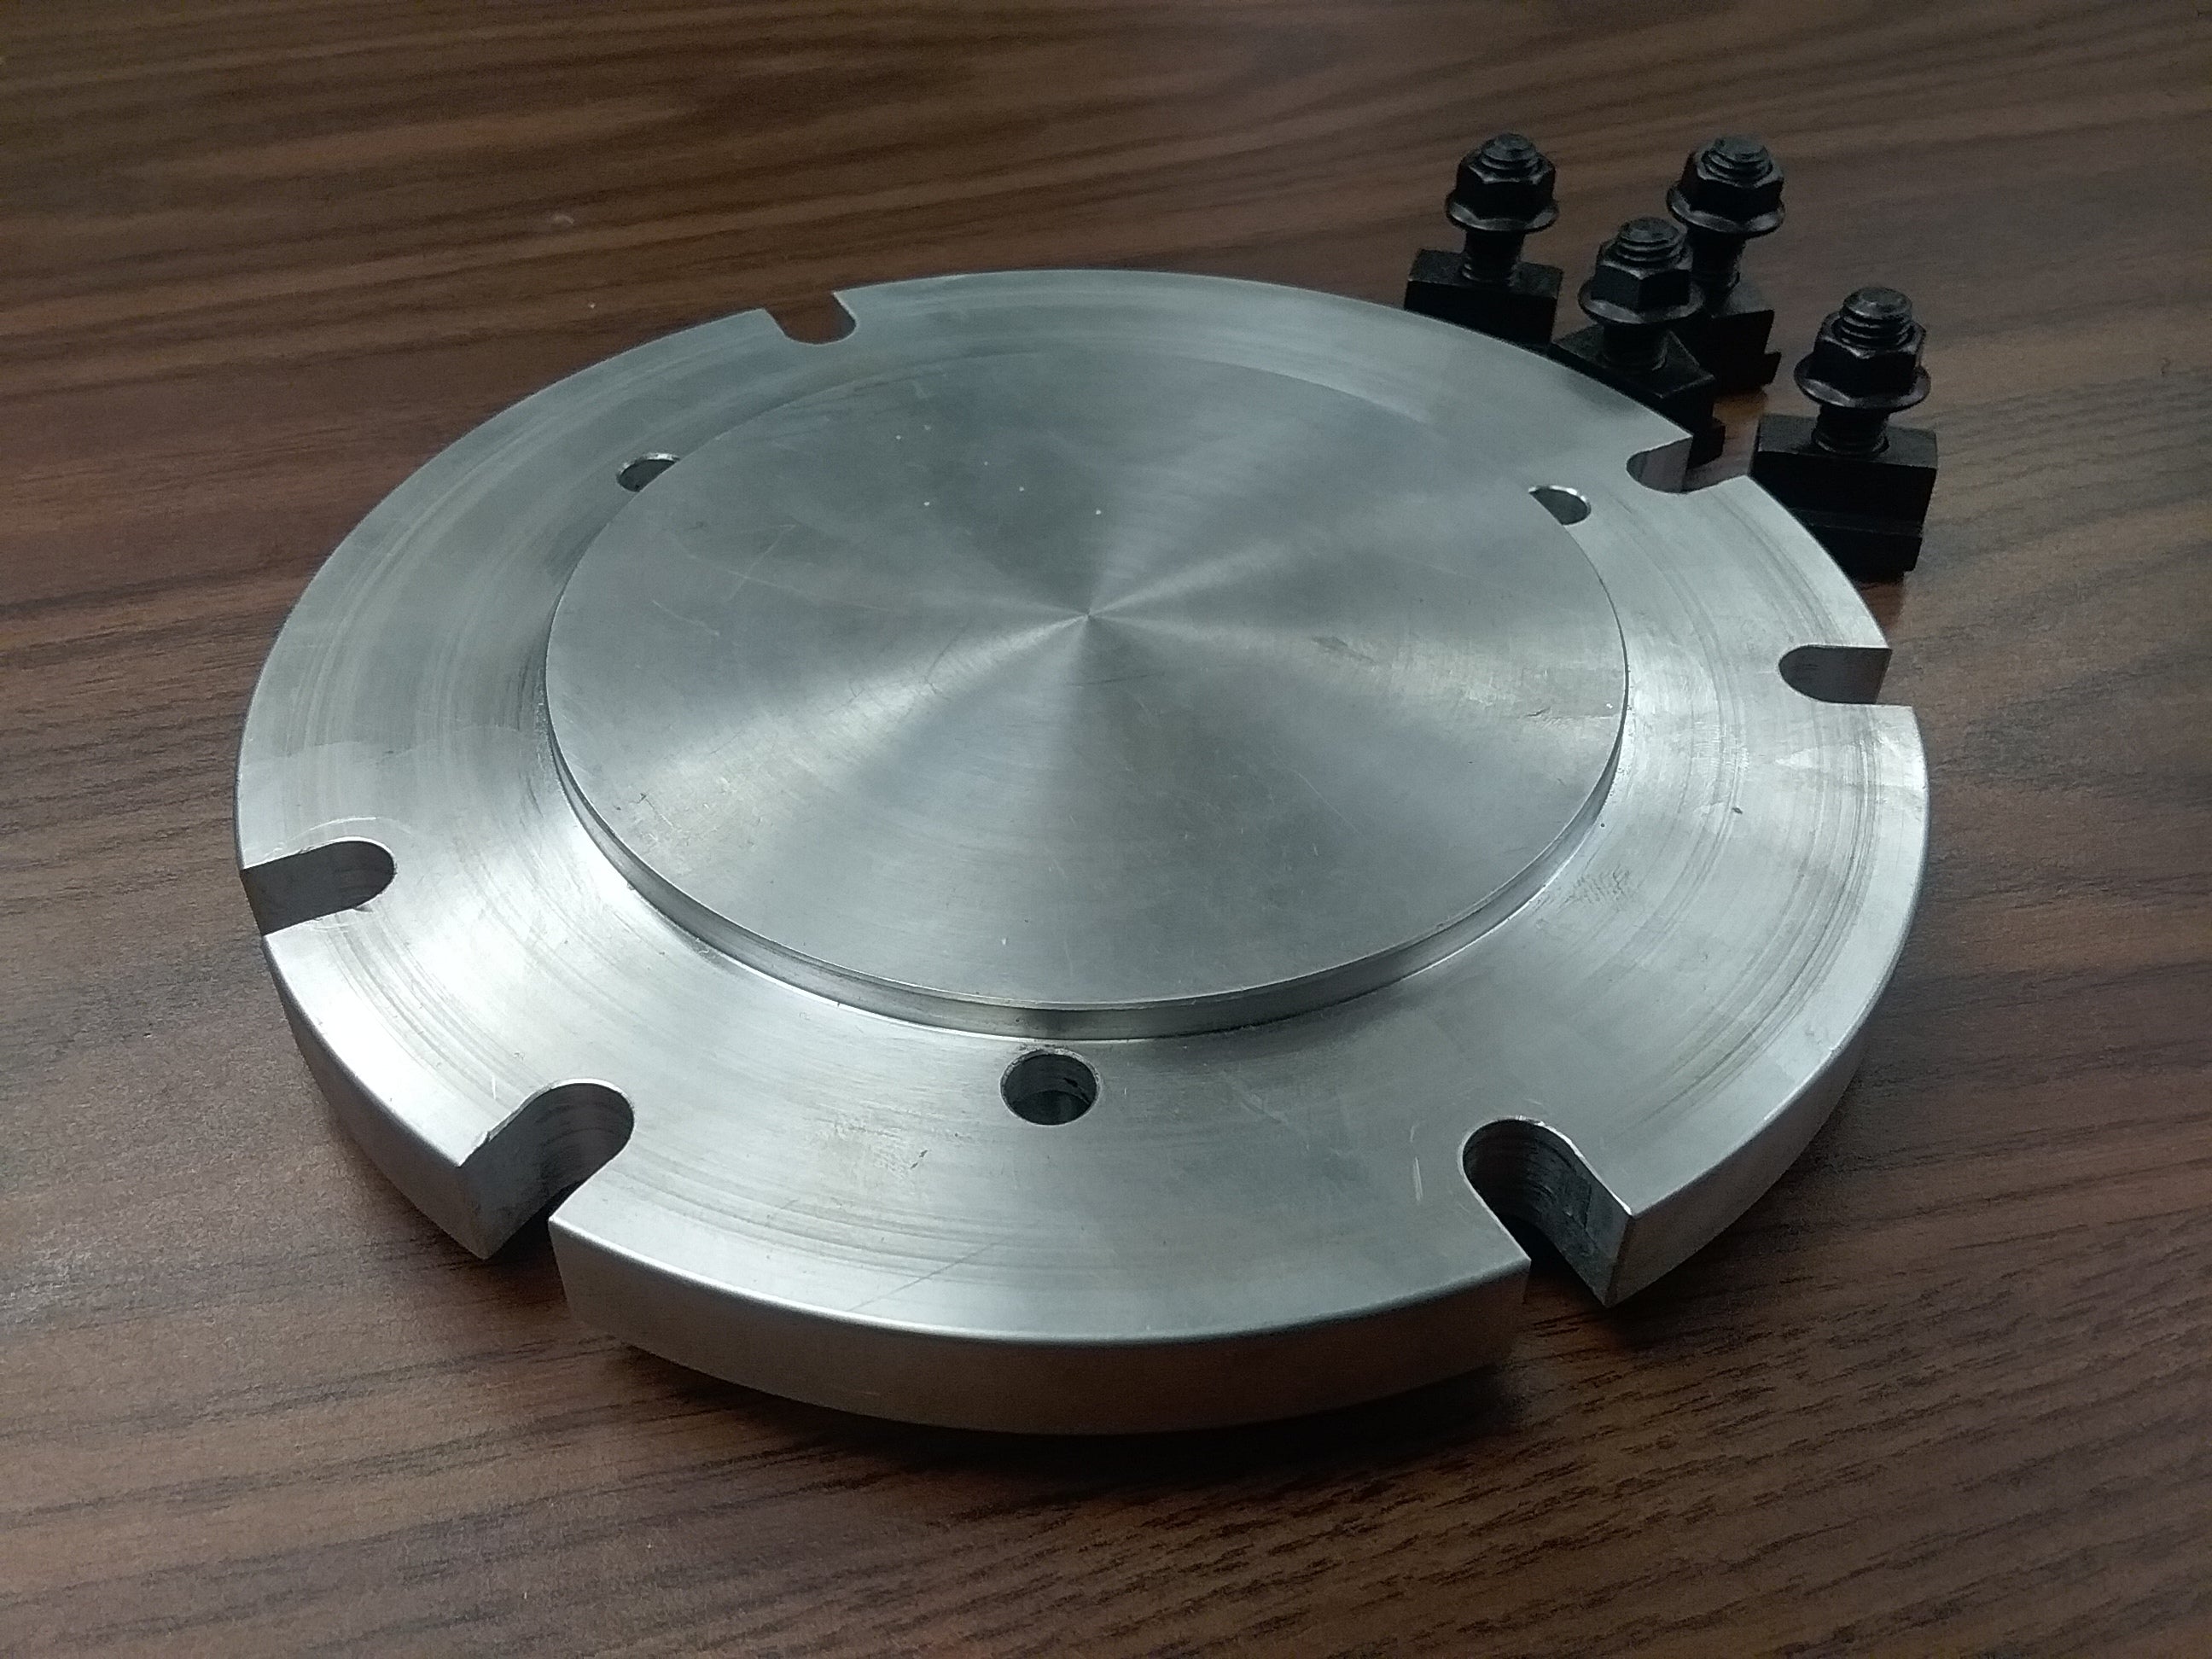 metal plate adaptor